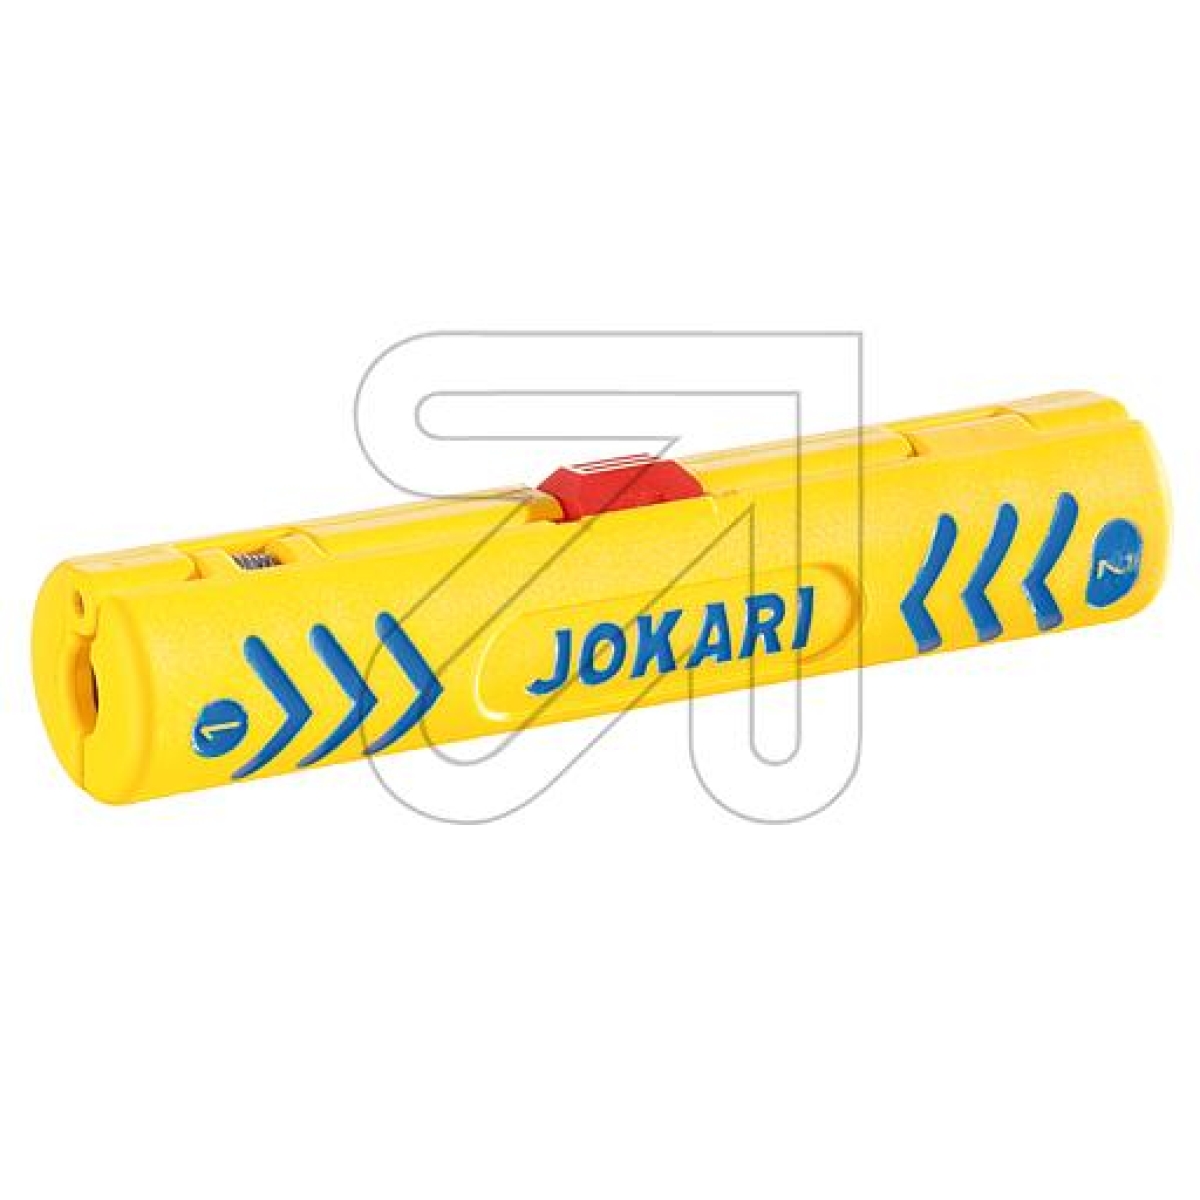 JokariKoax-Entmantler Secura Coaxi Nr.1